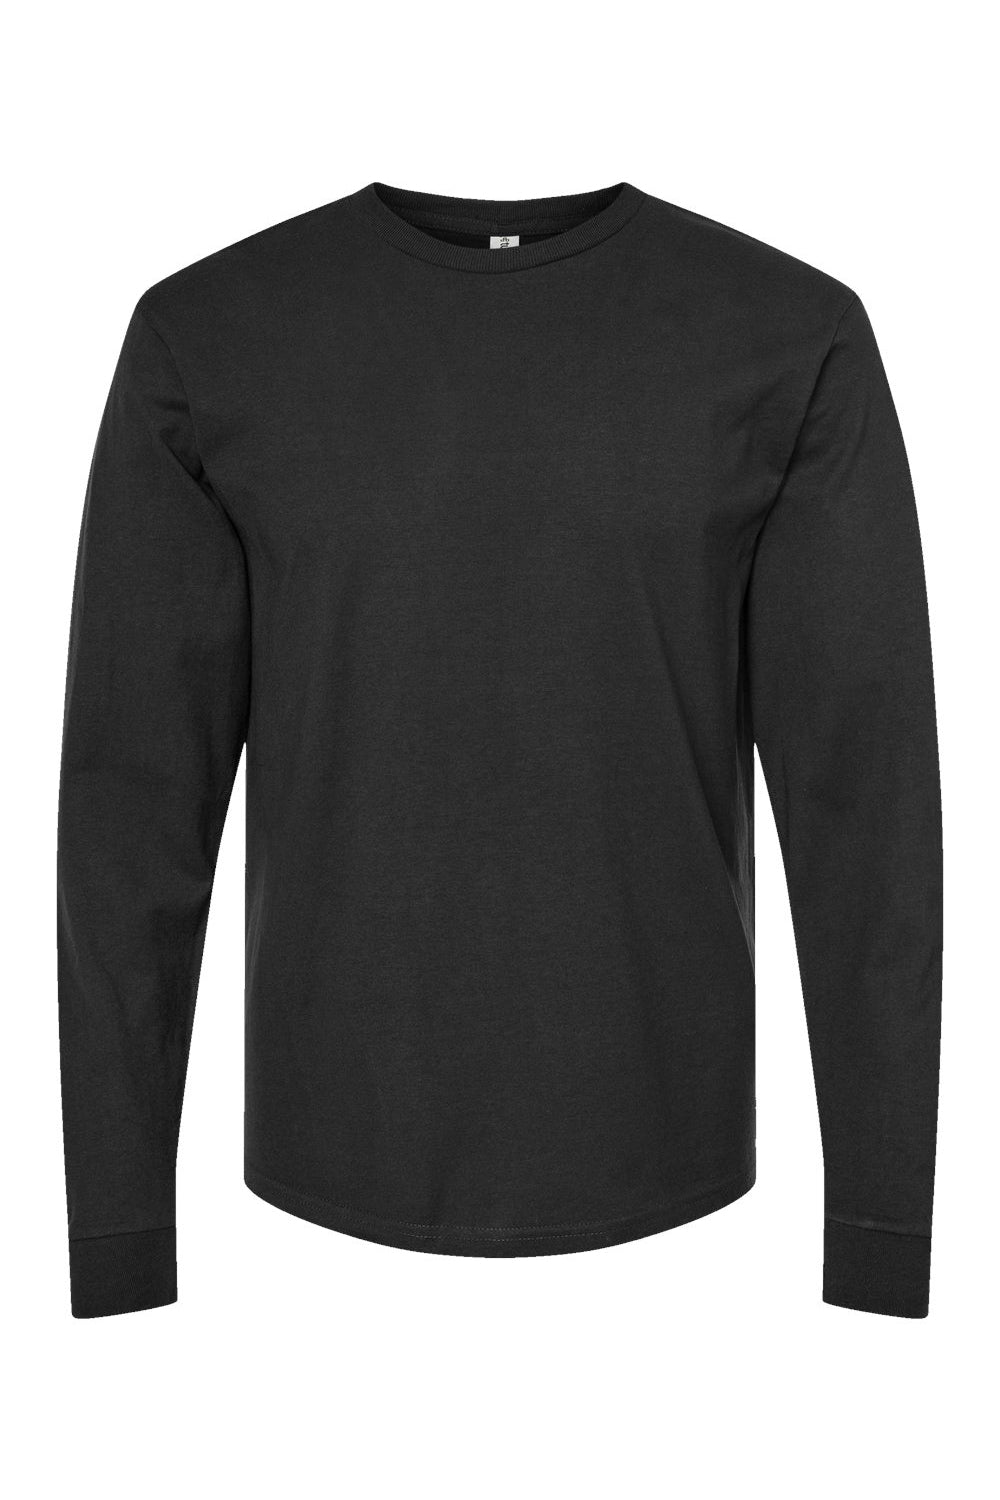 Tultex 291 Mens Jersey Long Sleeve Crewneck T-Shirt Black Flat Front